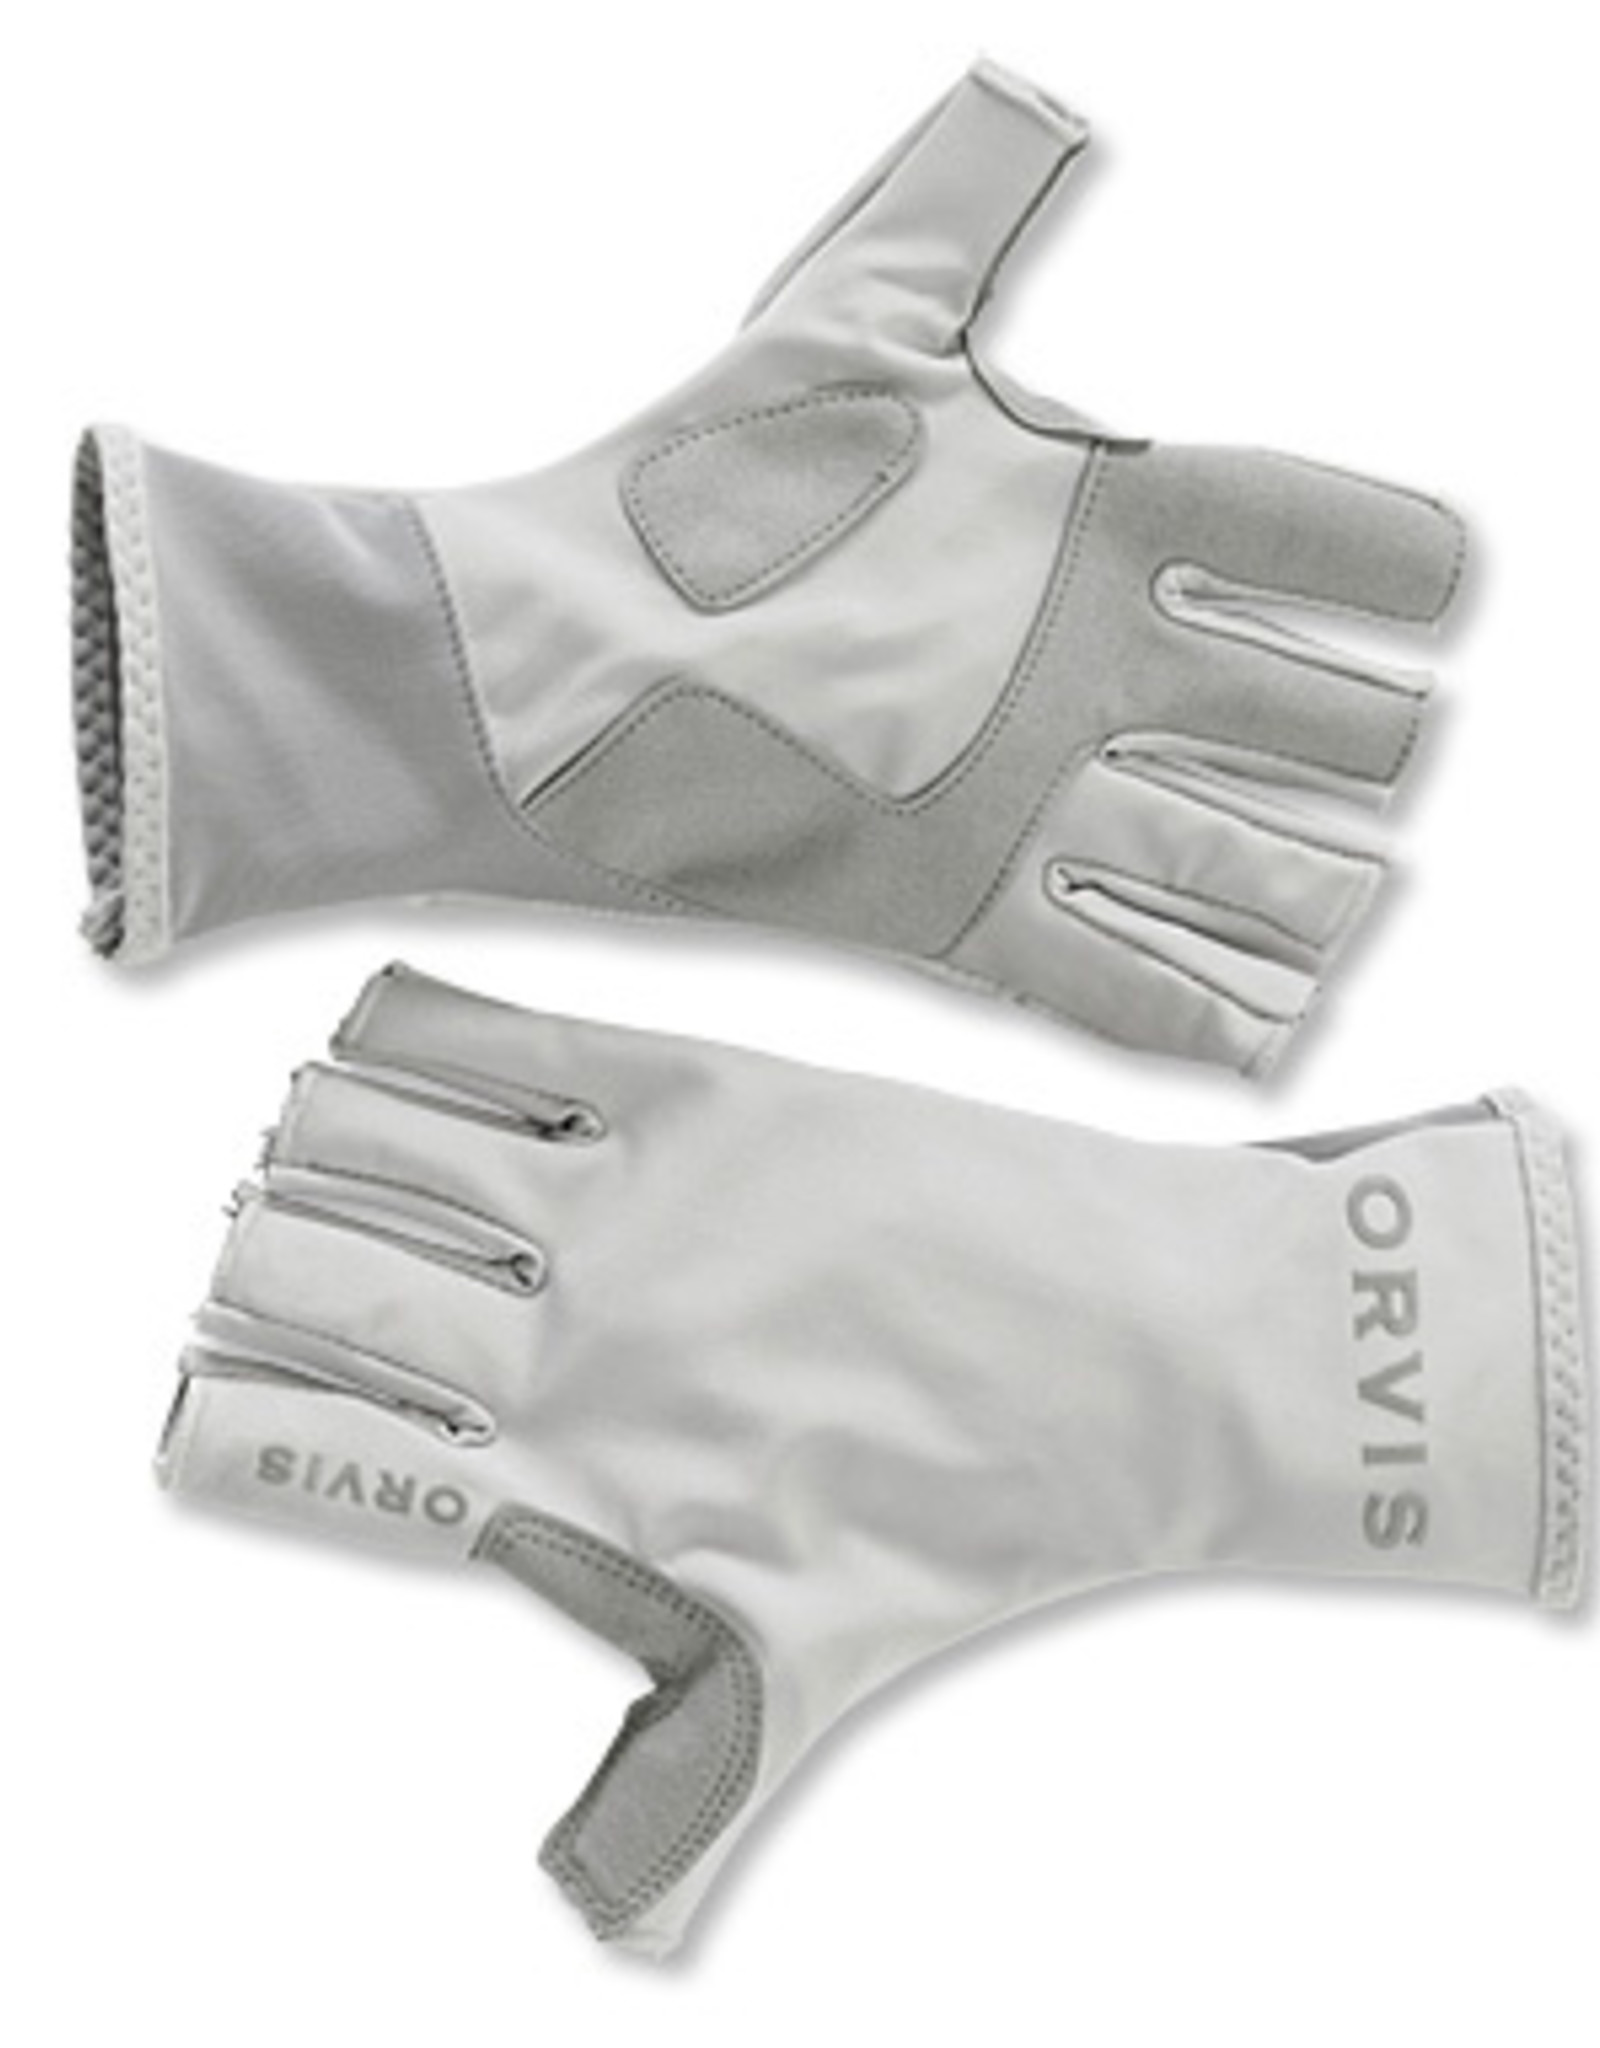 Orvis Sun Glove